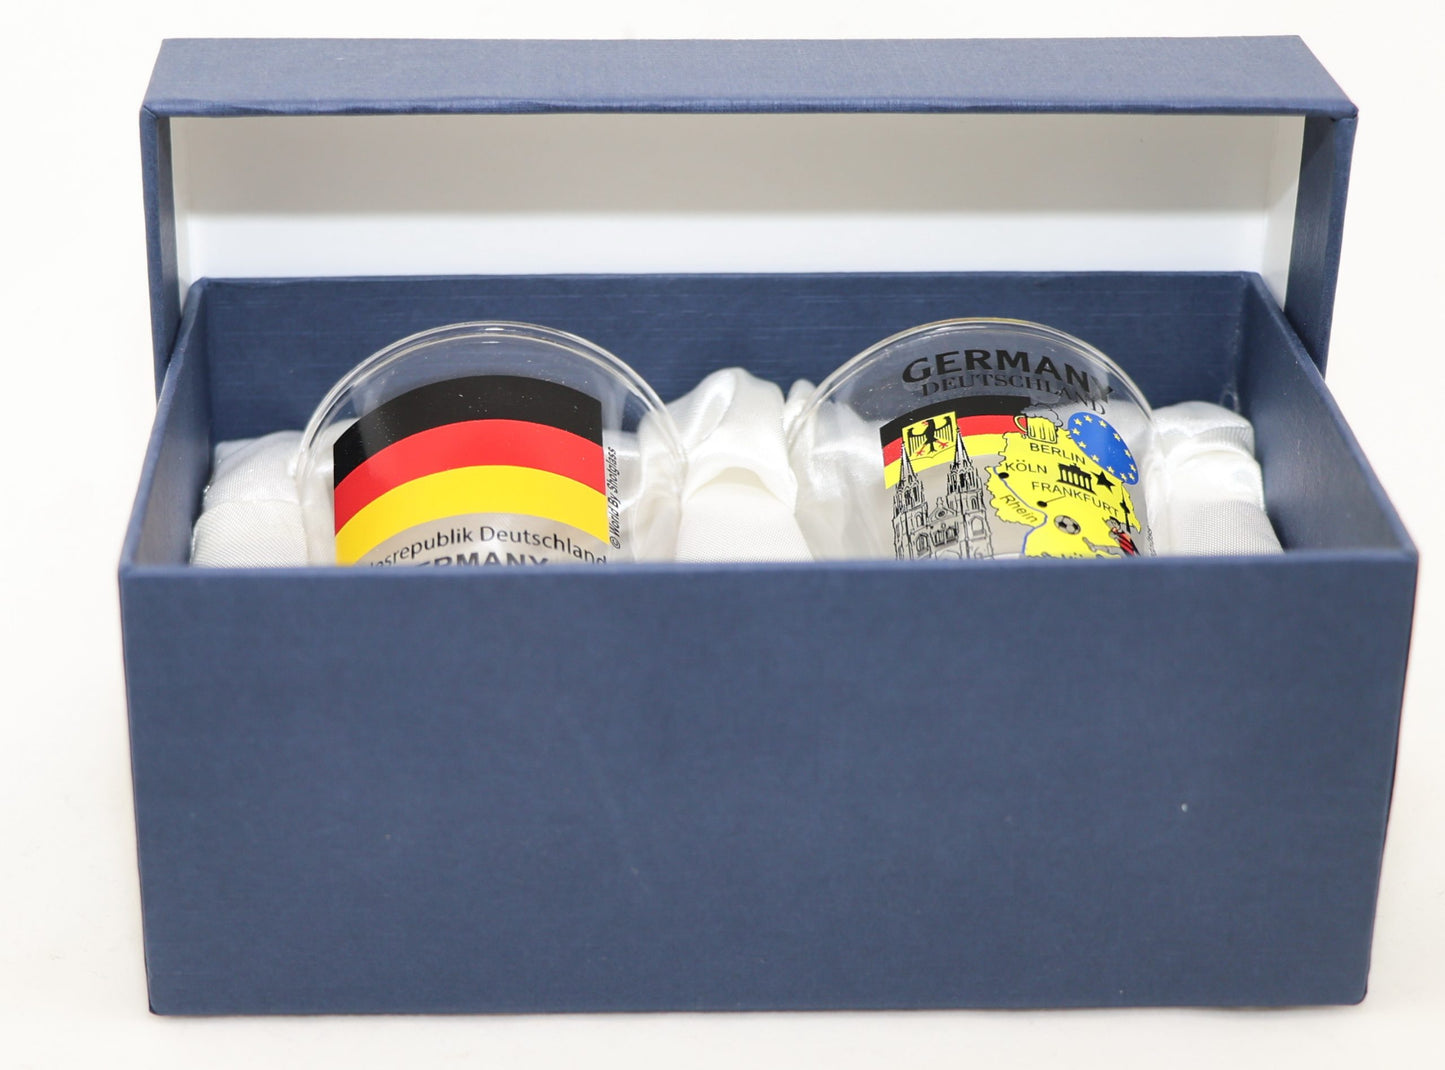 Germany Souvenir Boxed Shot Glass Set (Set of 2)